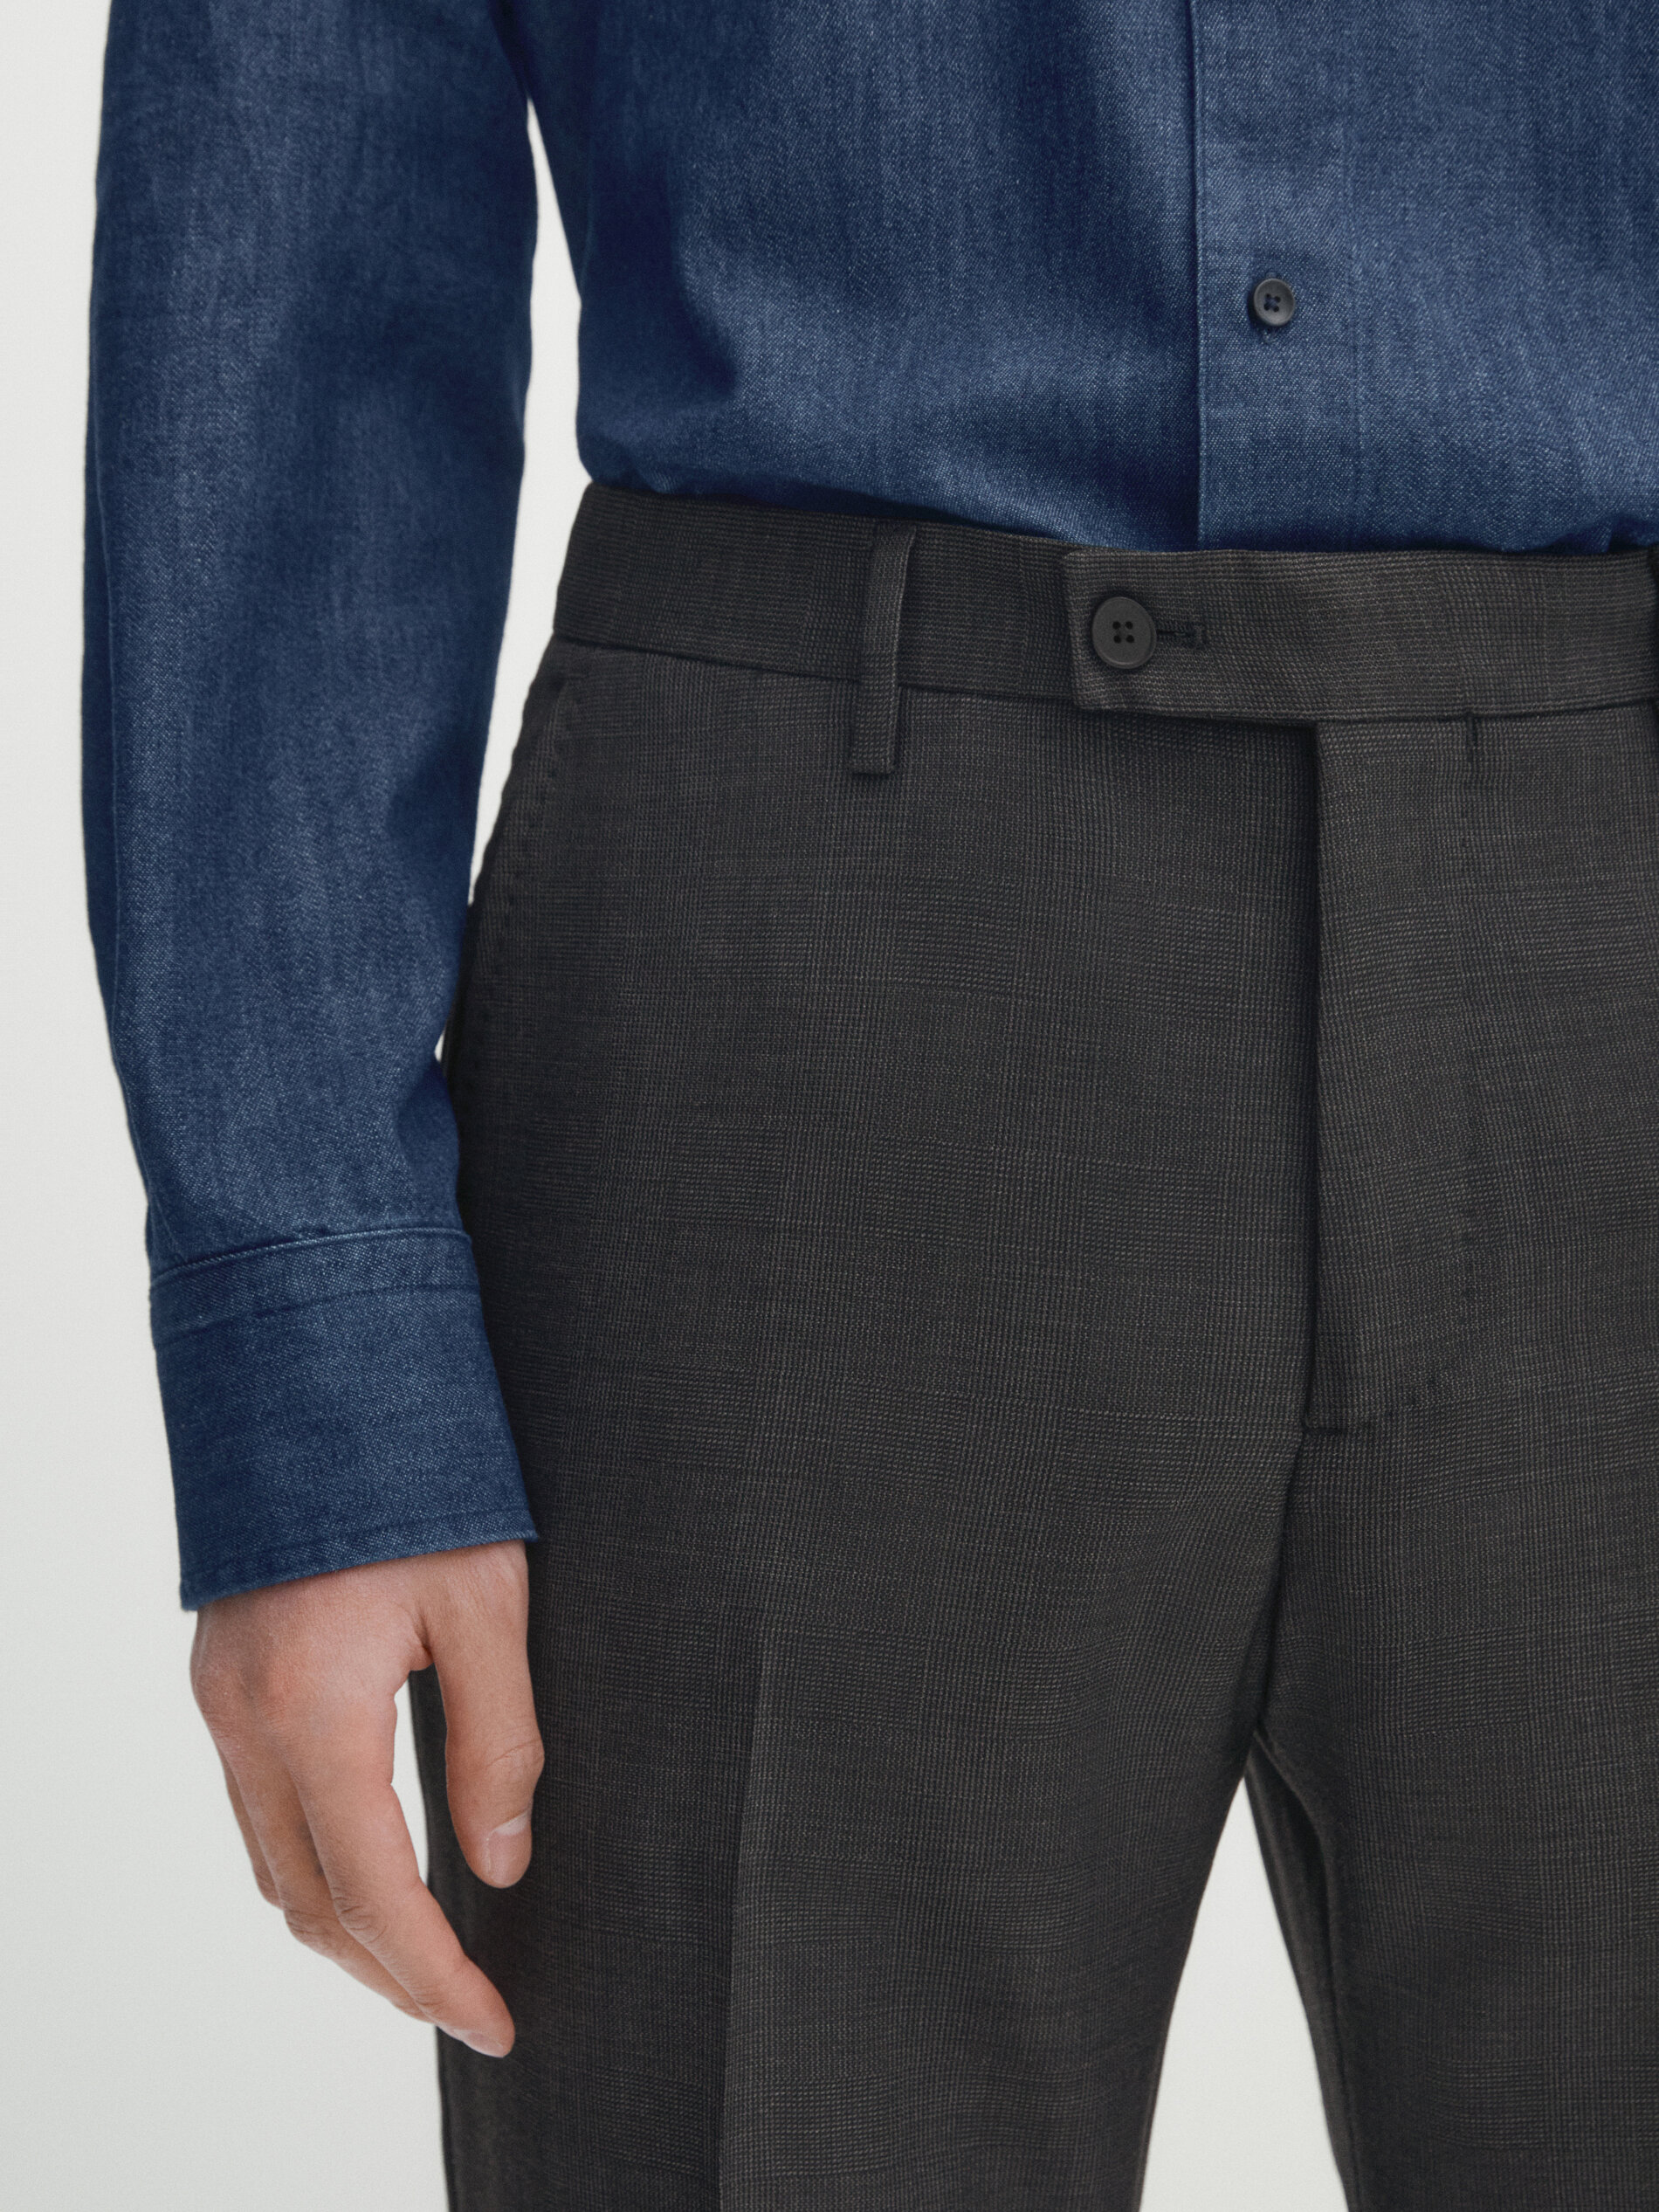 Pantalón traje gris cuadros 100% lana